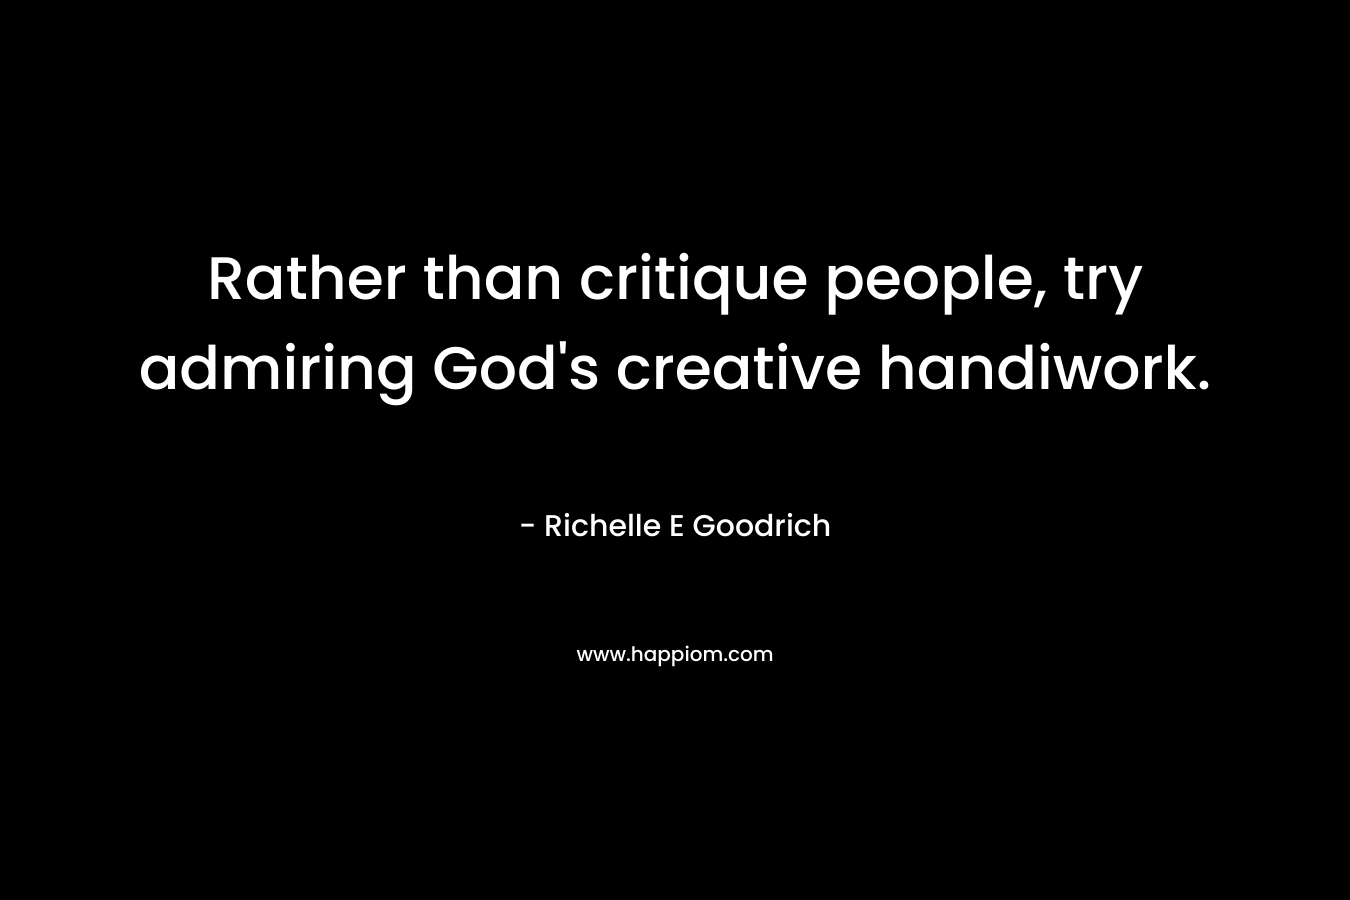 Rather than critique people, try admiring God's creative handiwork.